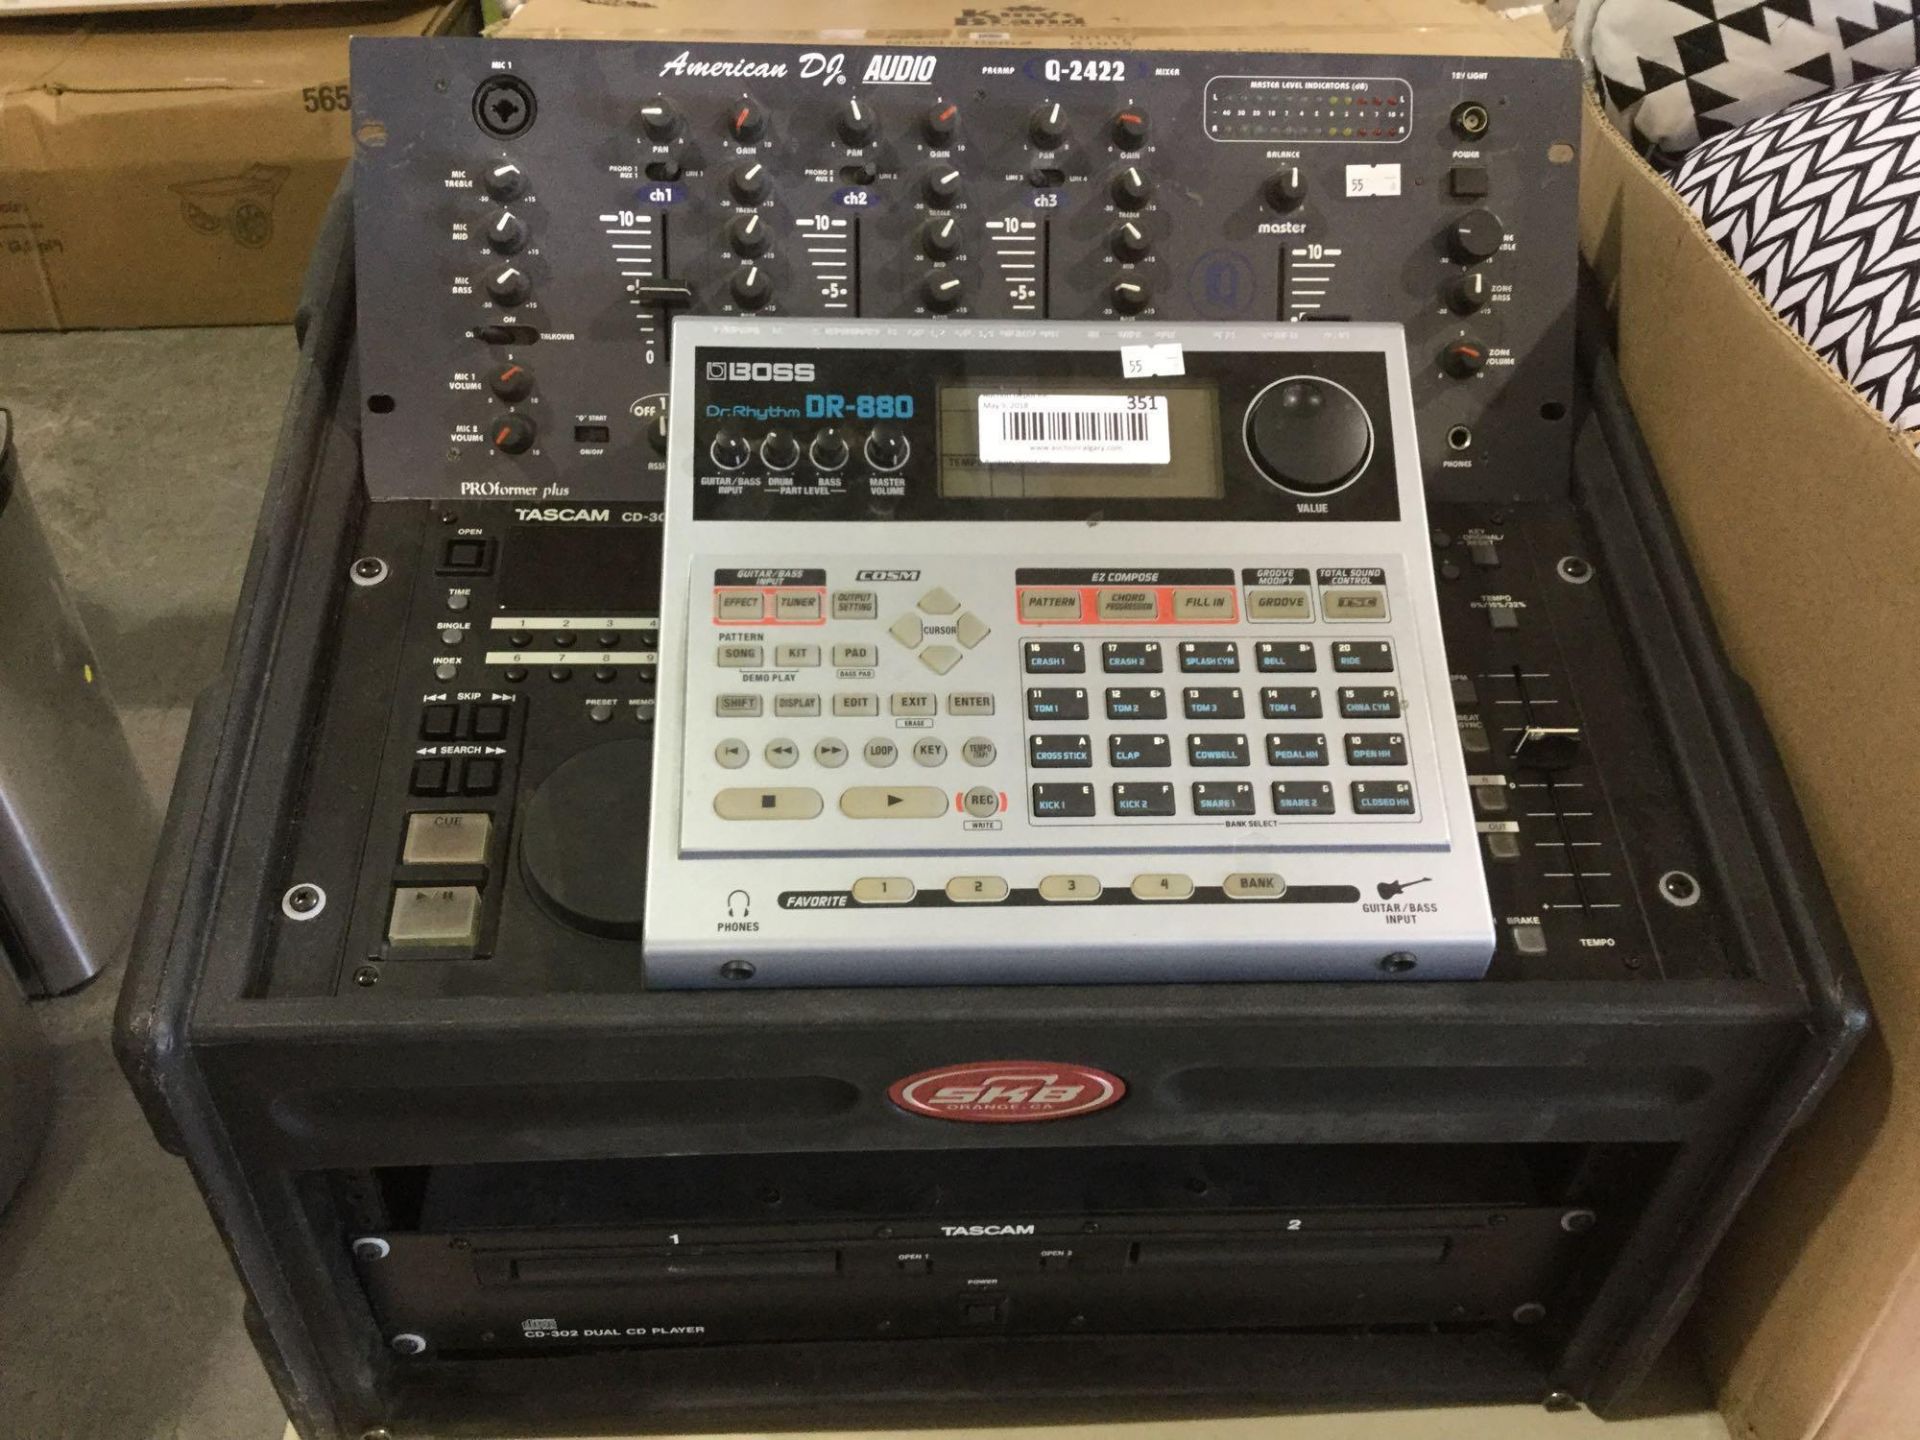 American DJ portable mixing station